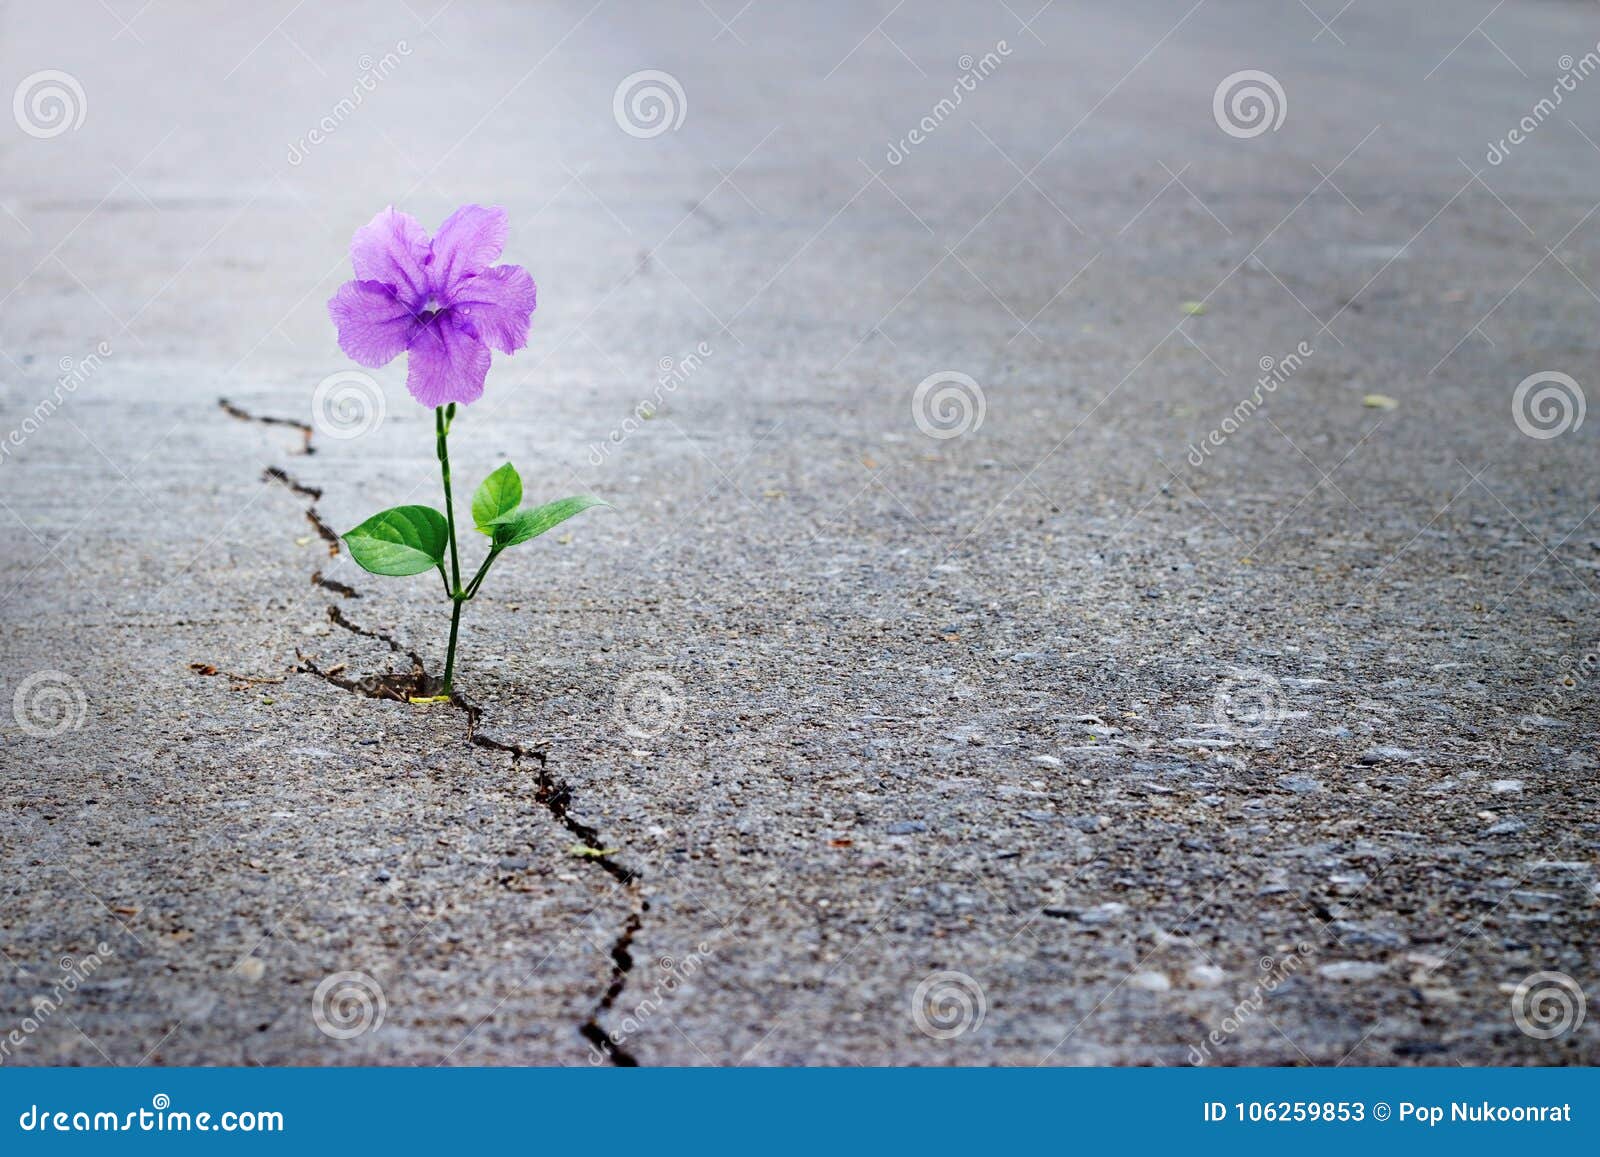 purple flower growing on crack street, soft focus